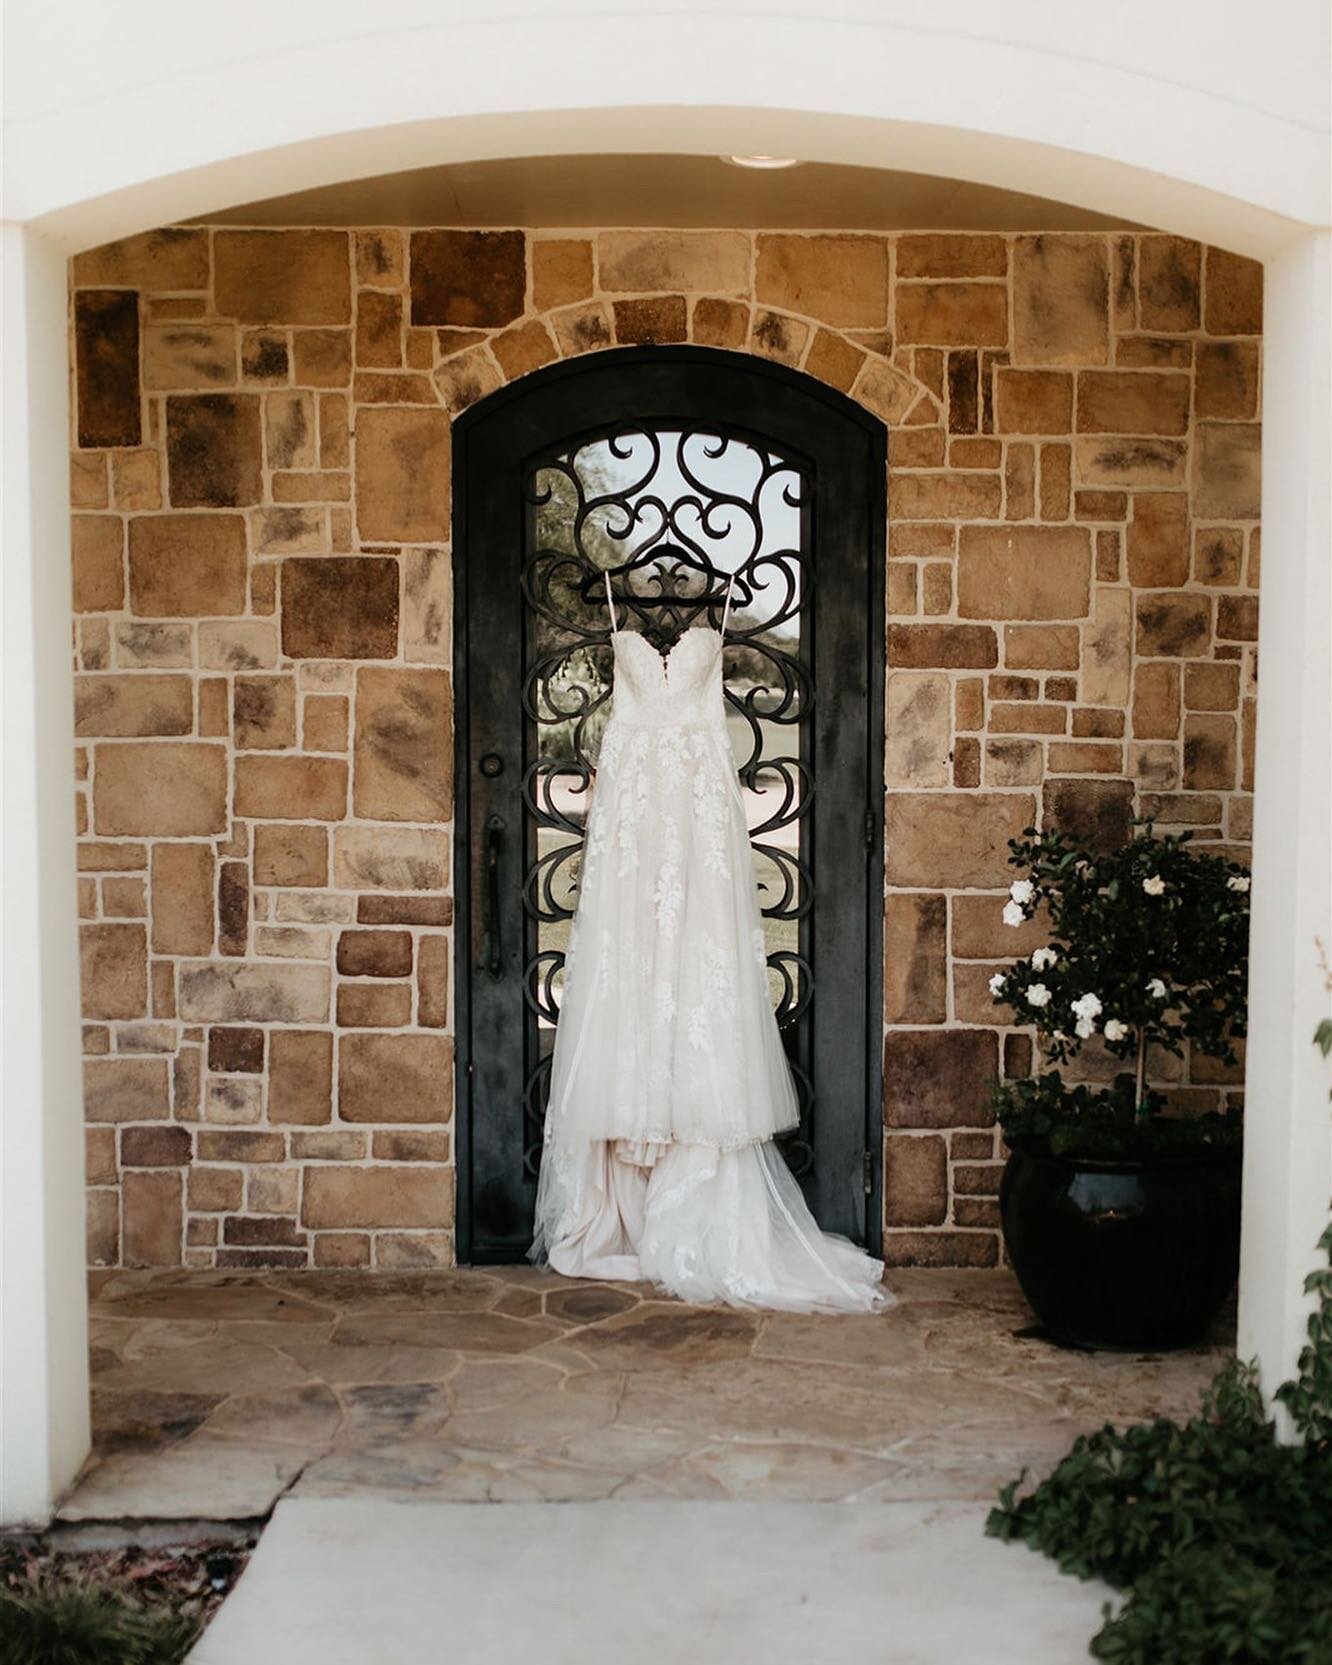 The perfect backdrop for the perfect dress ✨
⠀⠀⠀⠀⠀⠀⠀⠀⠀
#tuscanoaks #tuscanoakswedding #texasweddings #dallasfortworthweddings #texasvenue 
#texasbride #dfwwedding #weddinginspiration #potd #venueinspo #venueinspiration